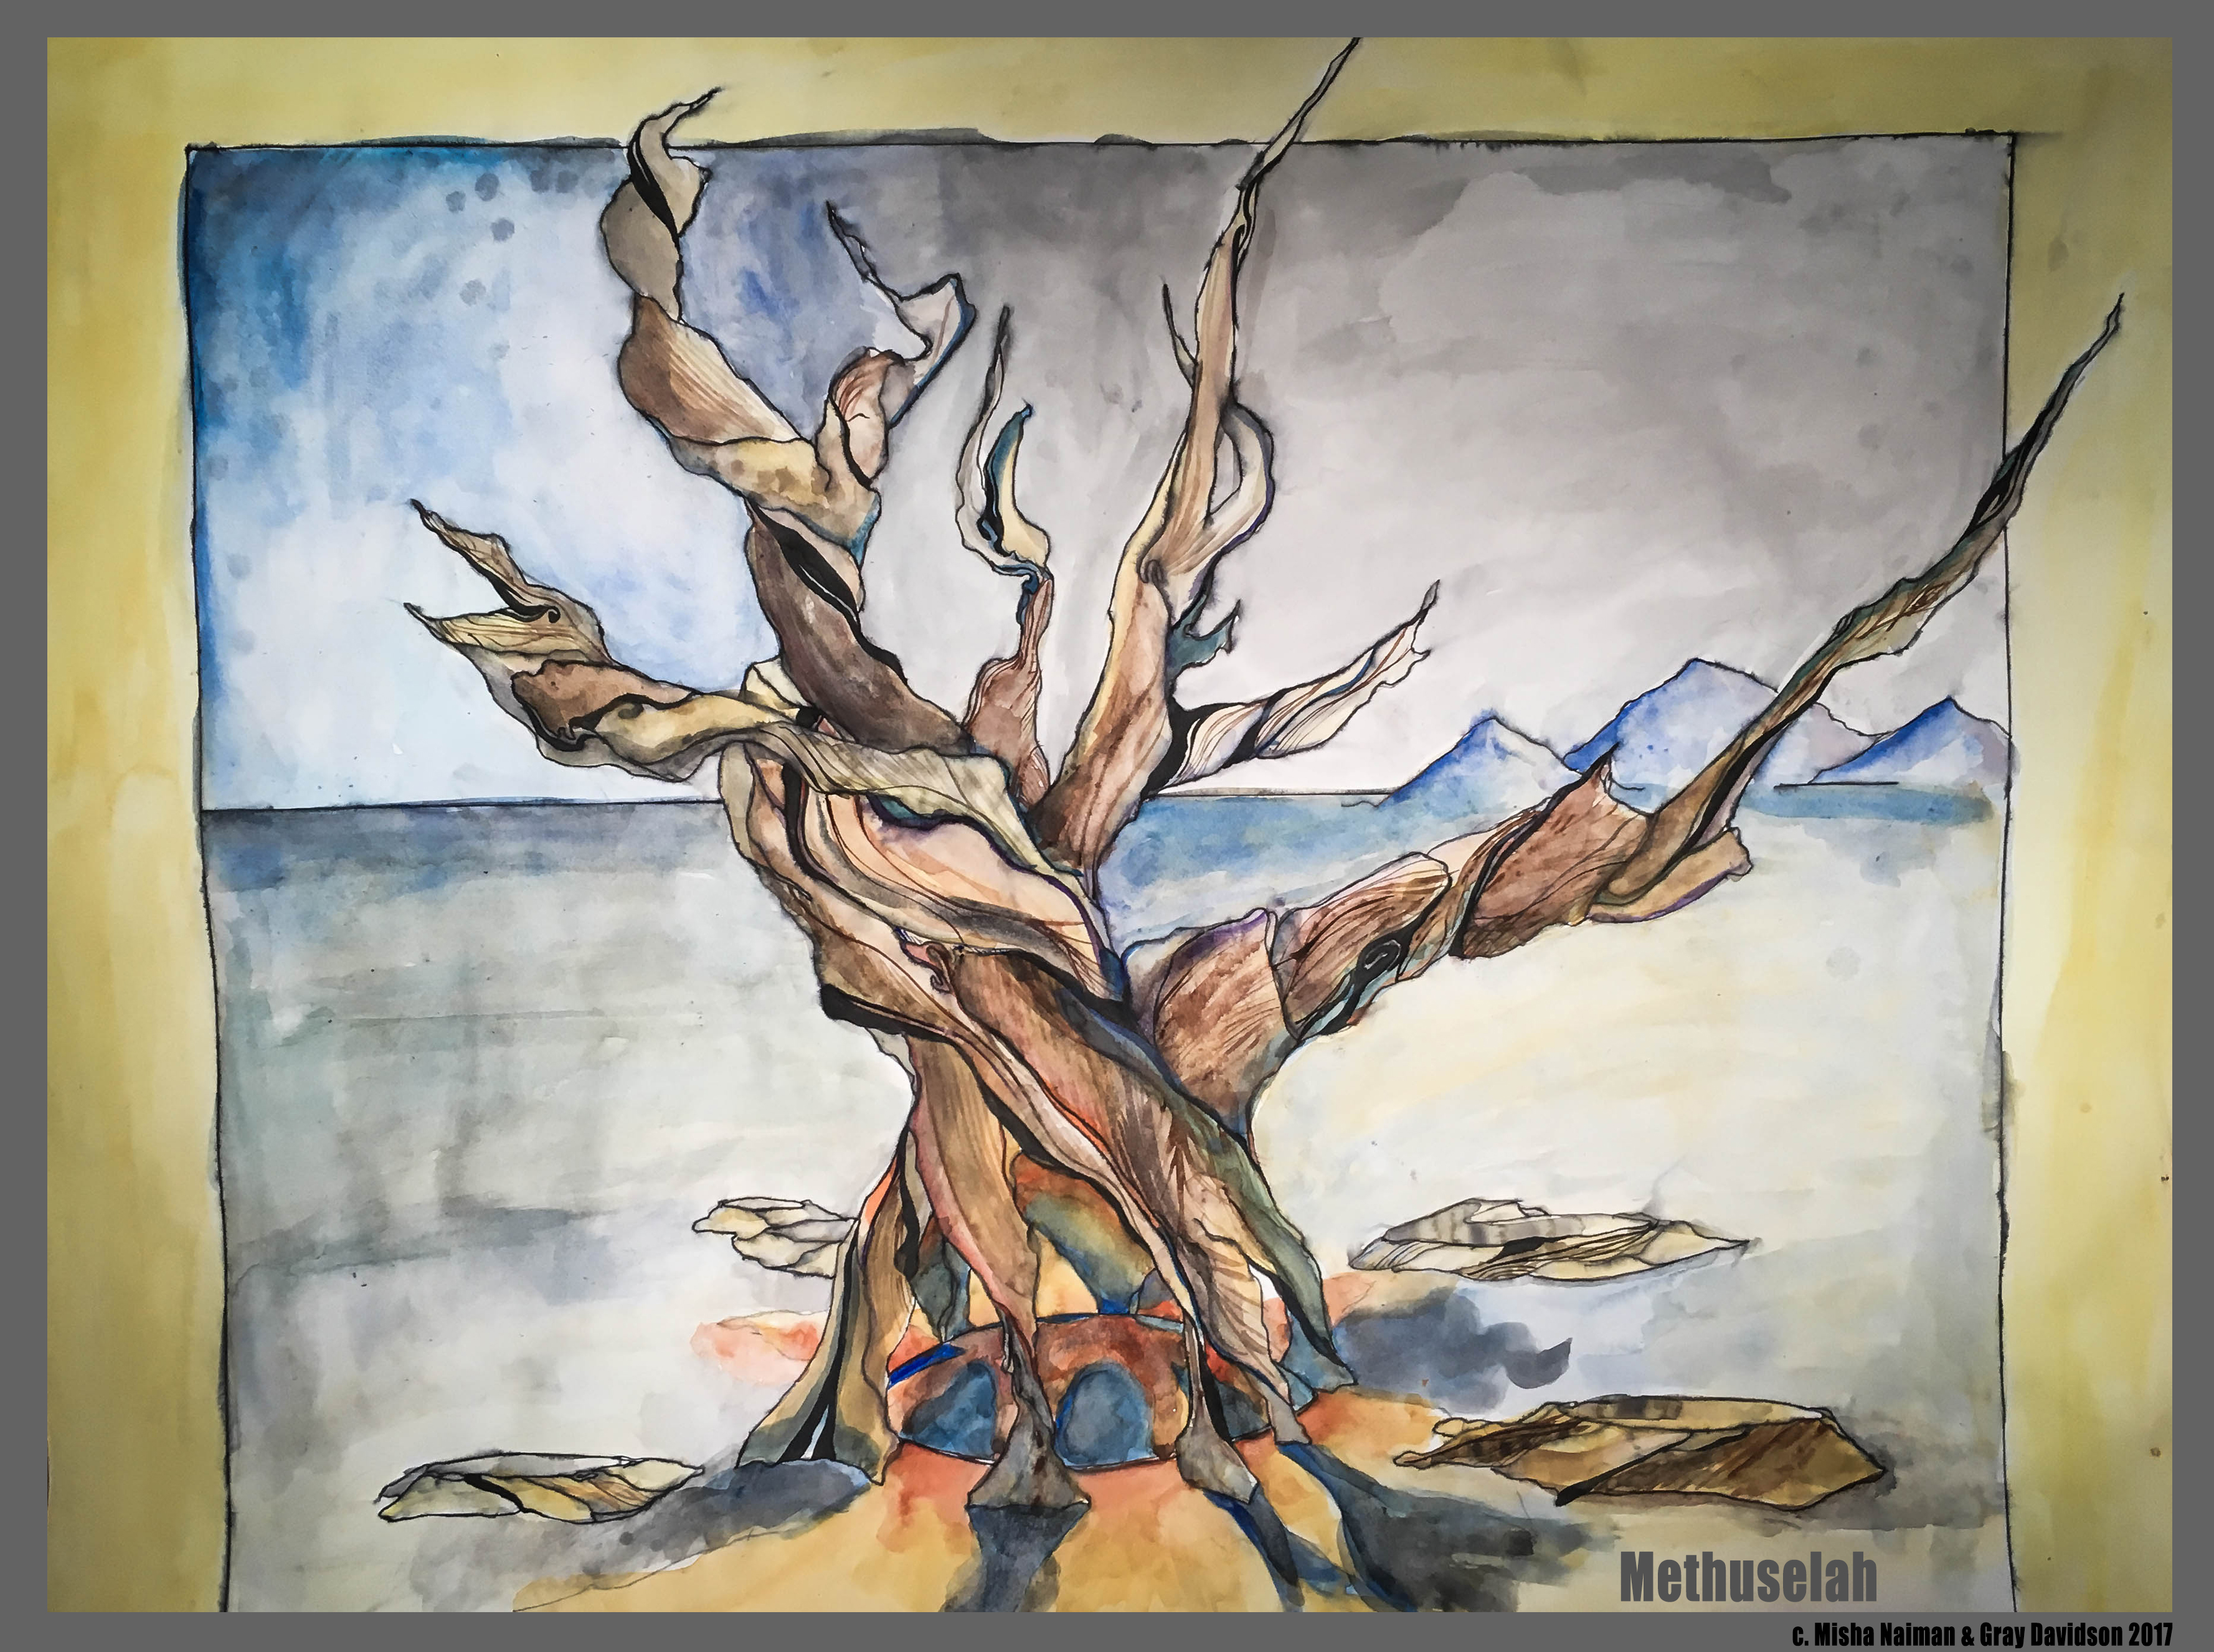 gray davidson and misha naiman watercolor collaboration of Methuselah